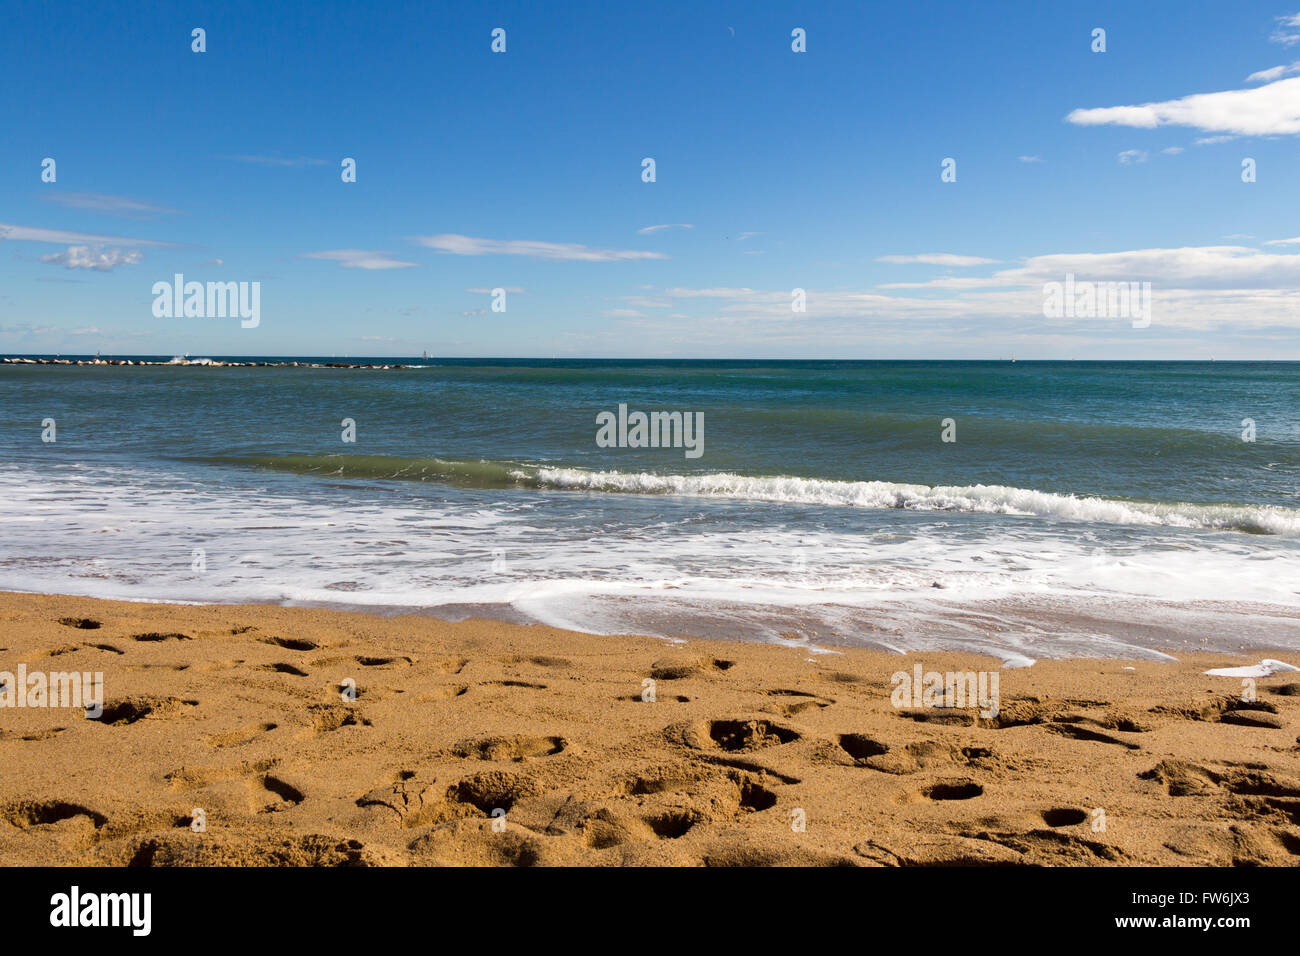 sea beach blue sky sand sun daylight relaxation landscape viewpoint for design postcard and calendar Stock Photo